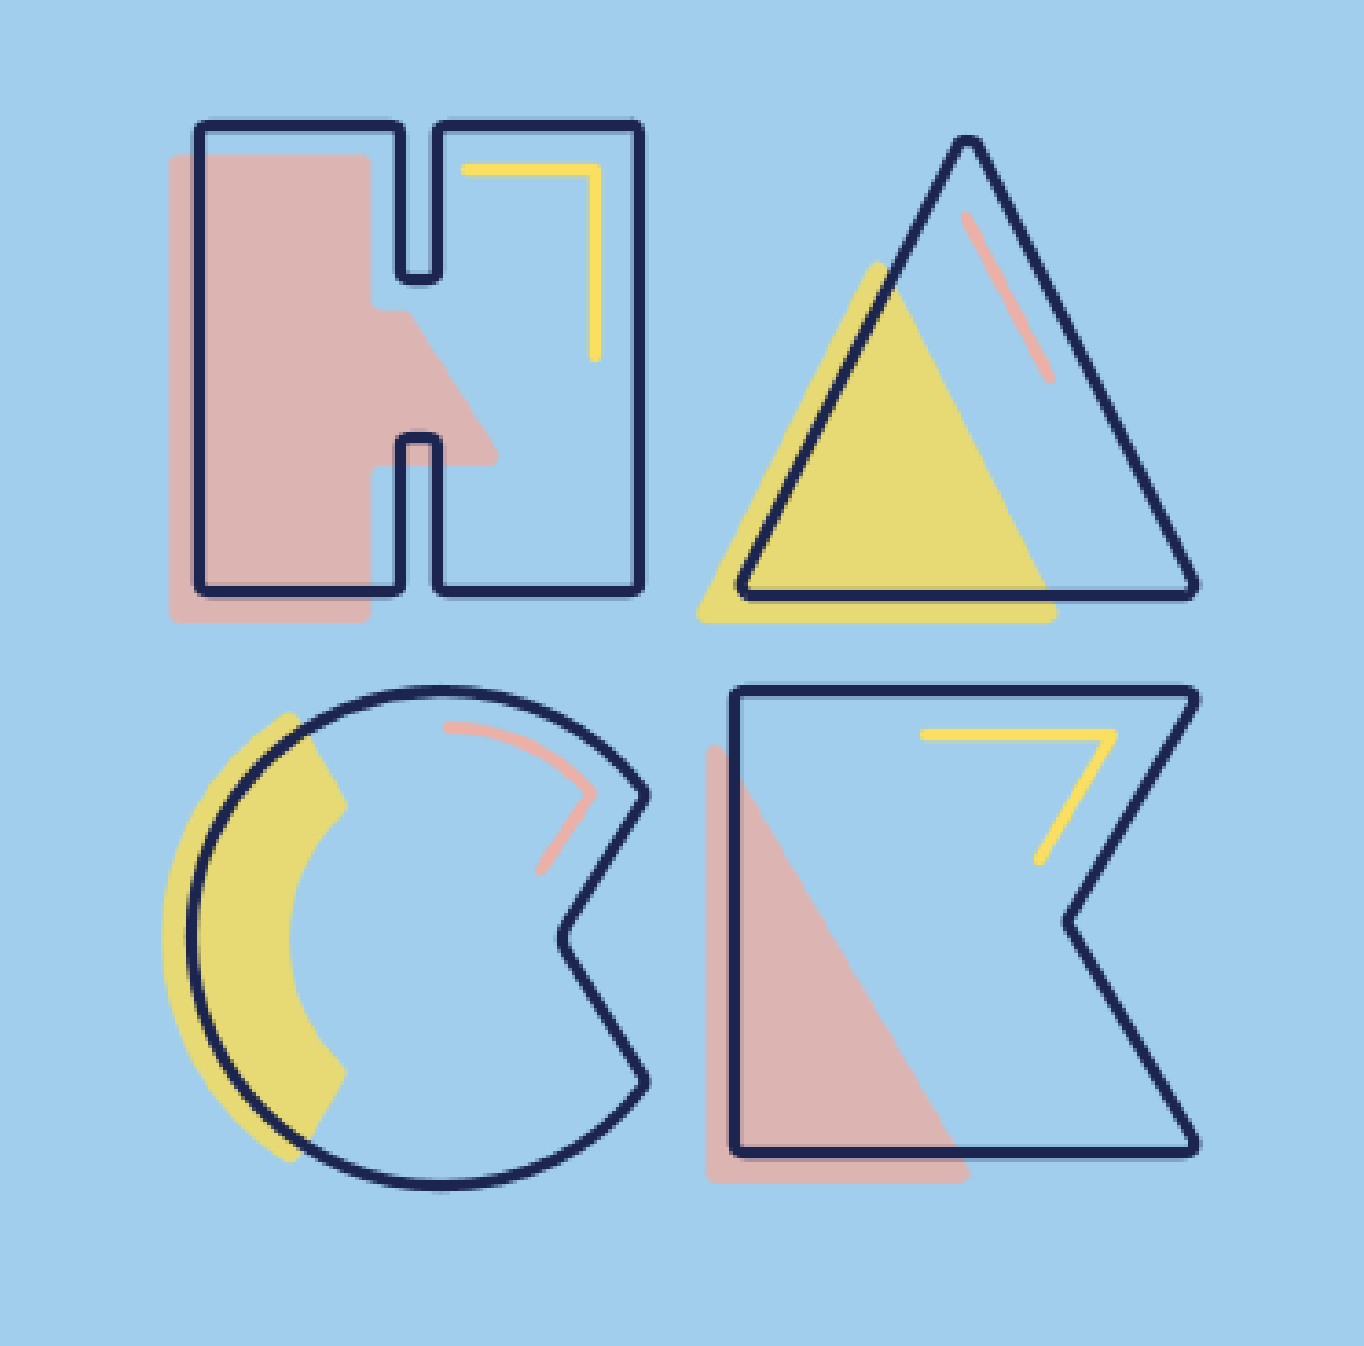 hack-logo-2.png